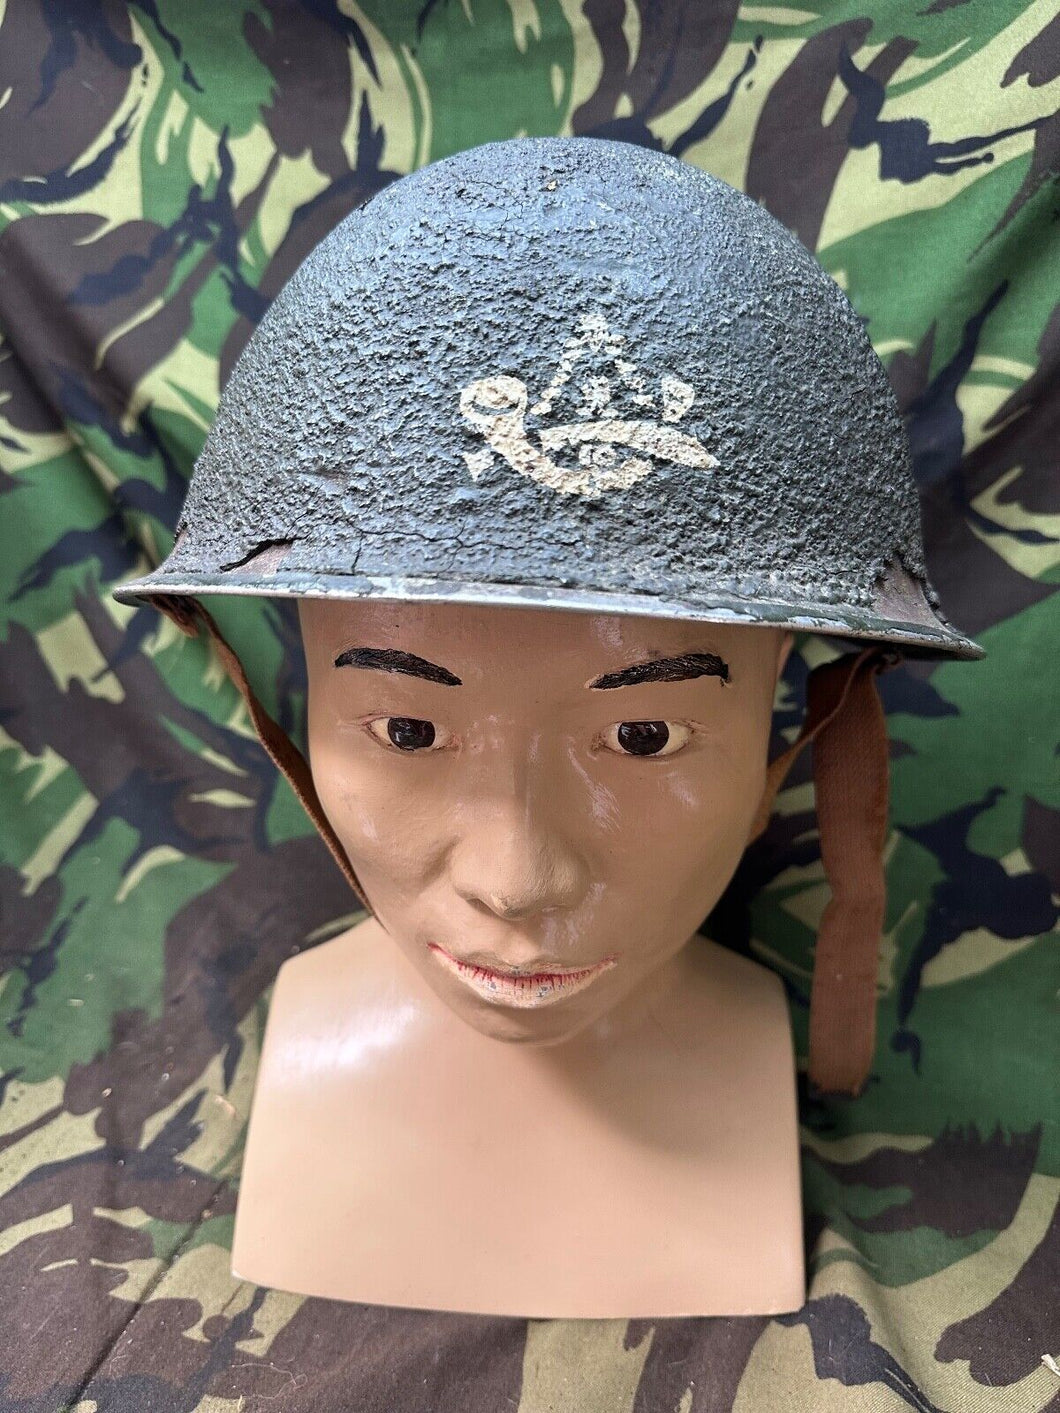 RARE Original British Army 10th Gurkha Mk4 Turtle Helmet - Head Included